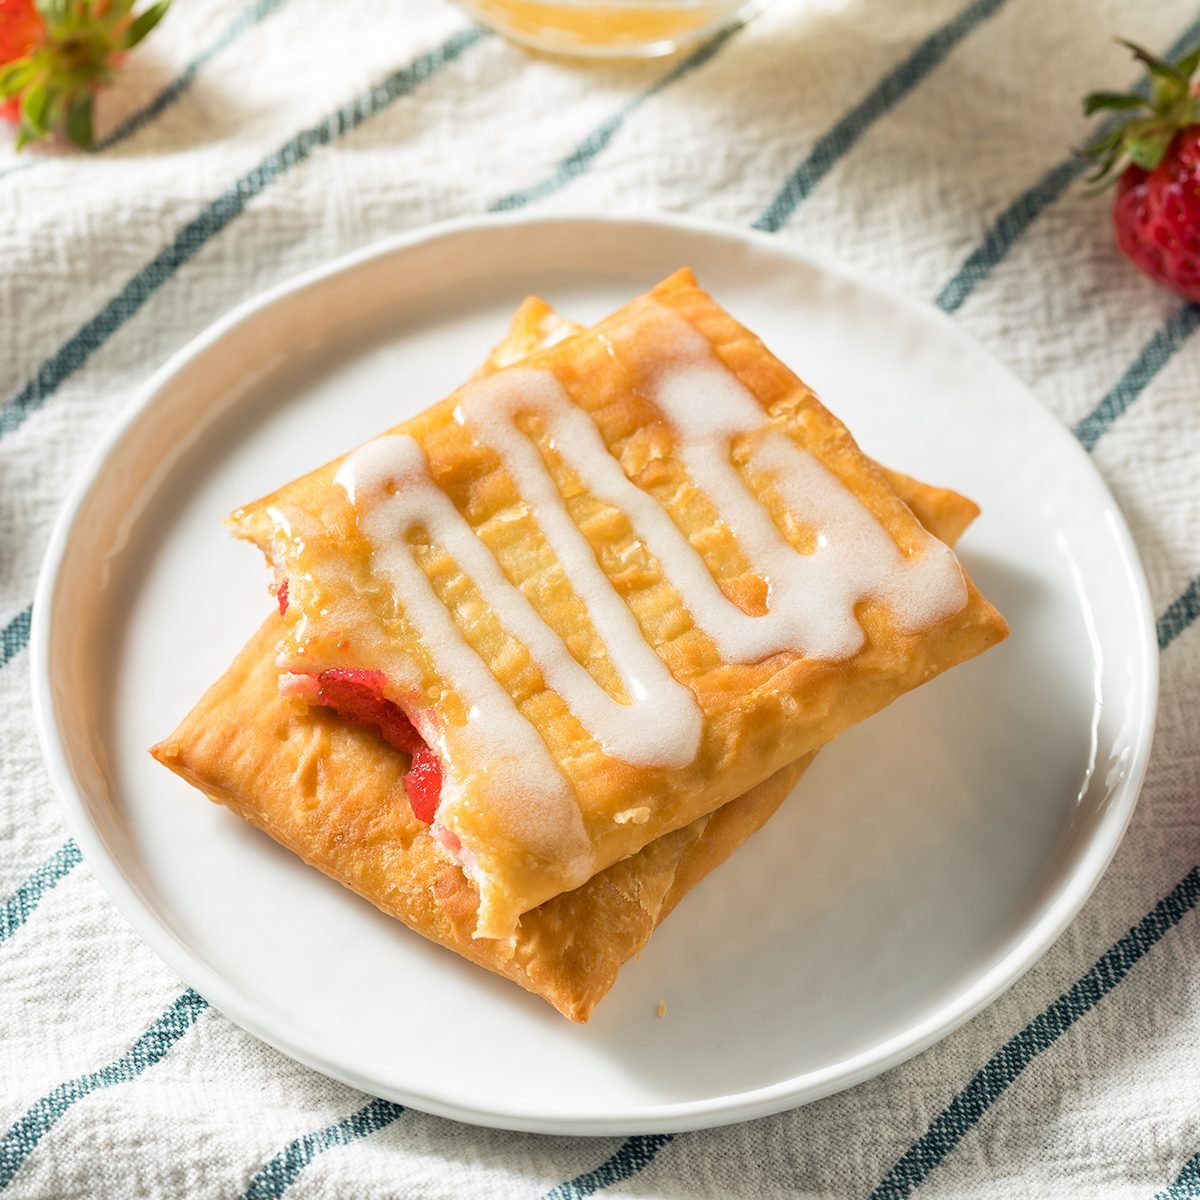 https://www.tasteofhome.com/wp-content/uploads/2019/11/sweet-breakfast-strawberry-toaster-pastry-frosting-shutterstock_1381751501.jpg